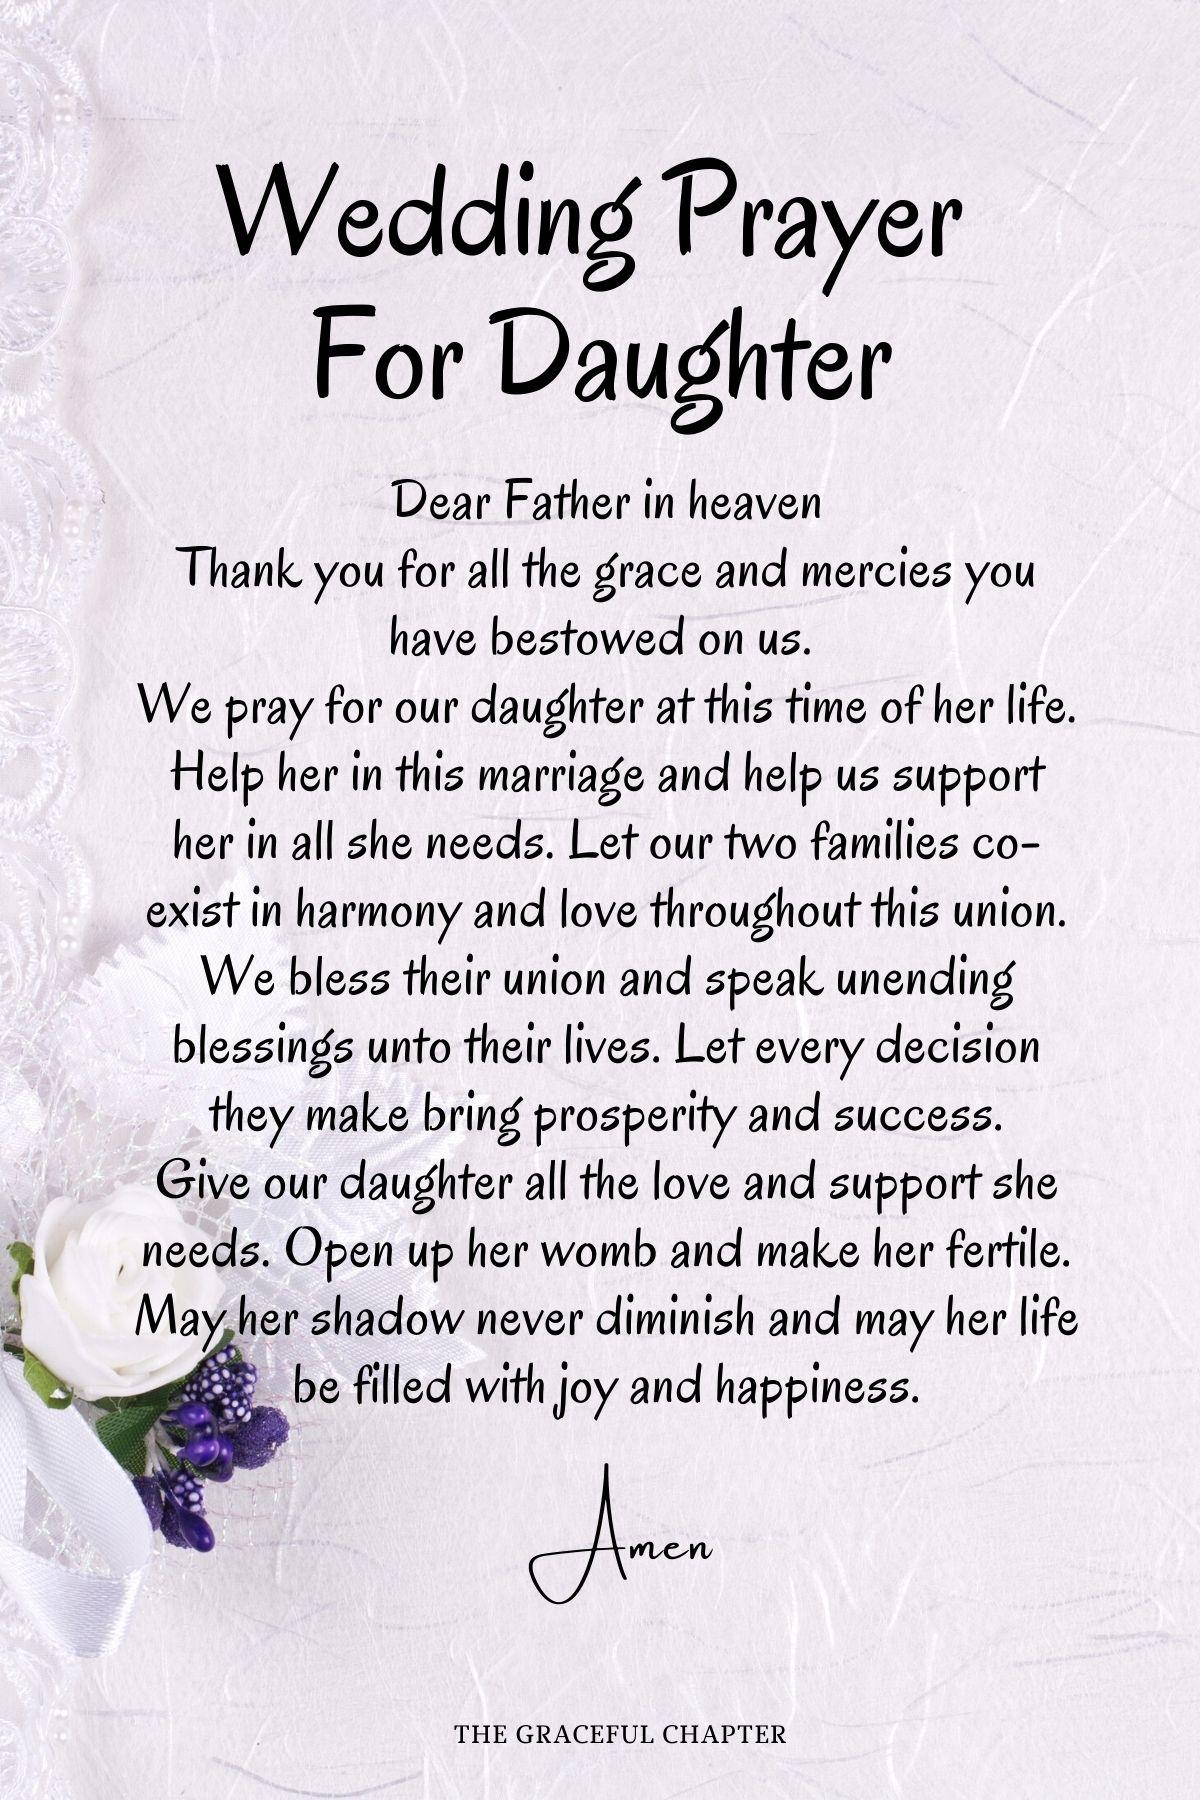 Wedding prayer for daughter